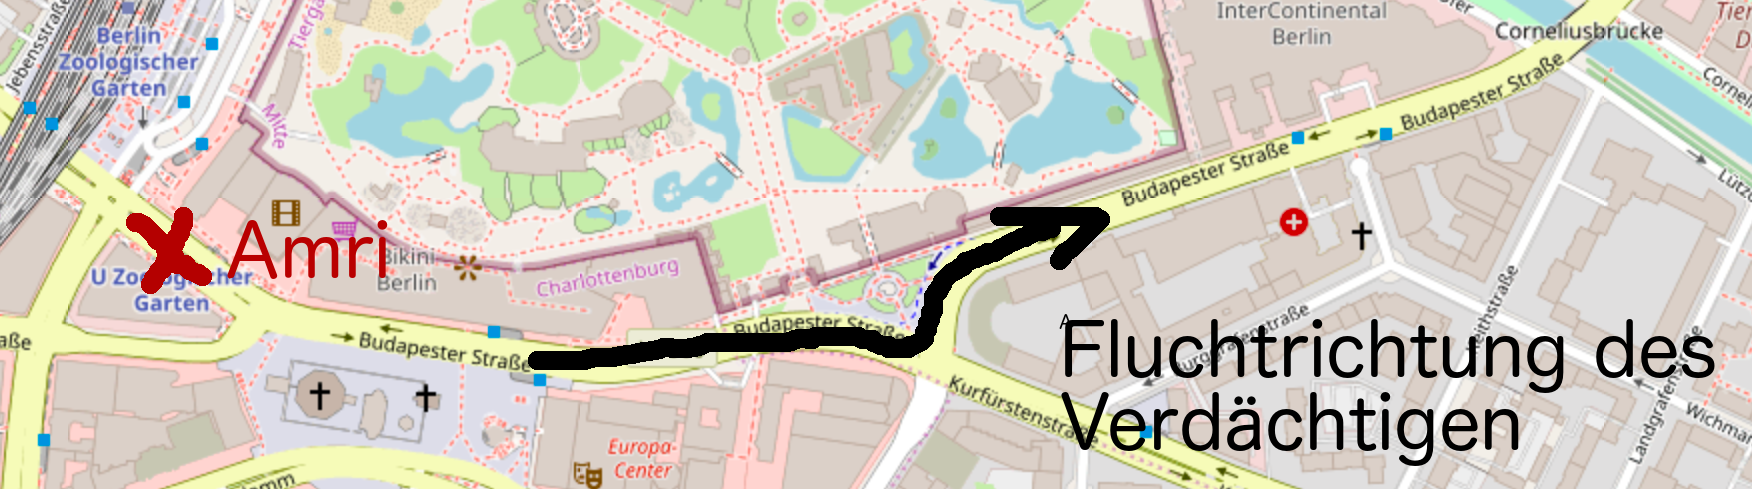 Lageplan des Tatorts (Quelle: OpenStreetmap)